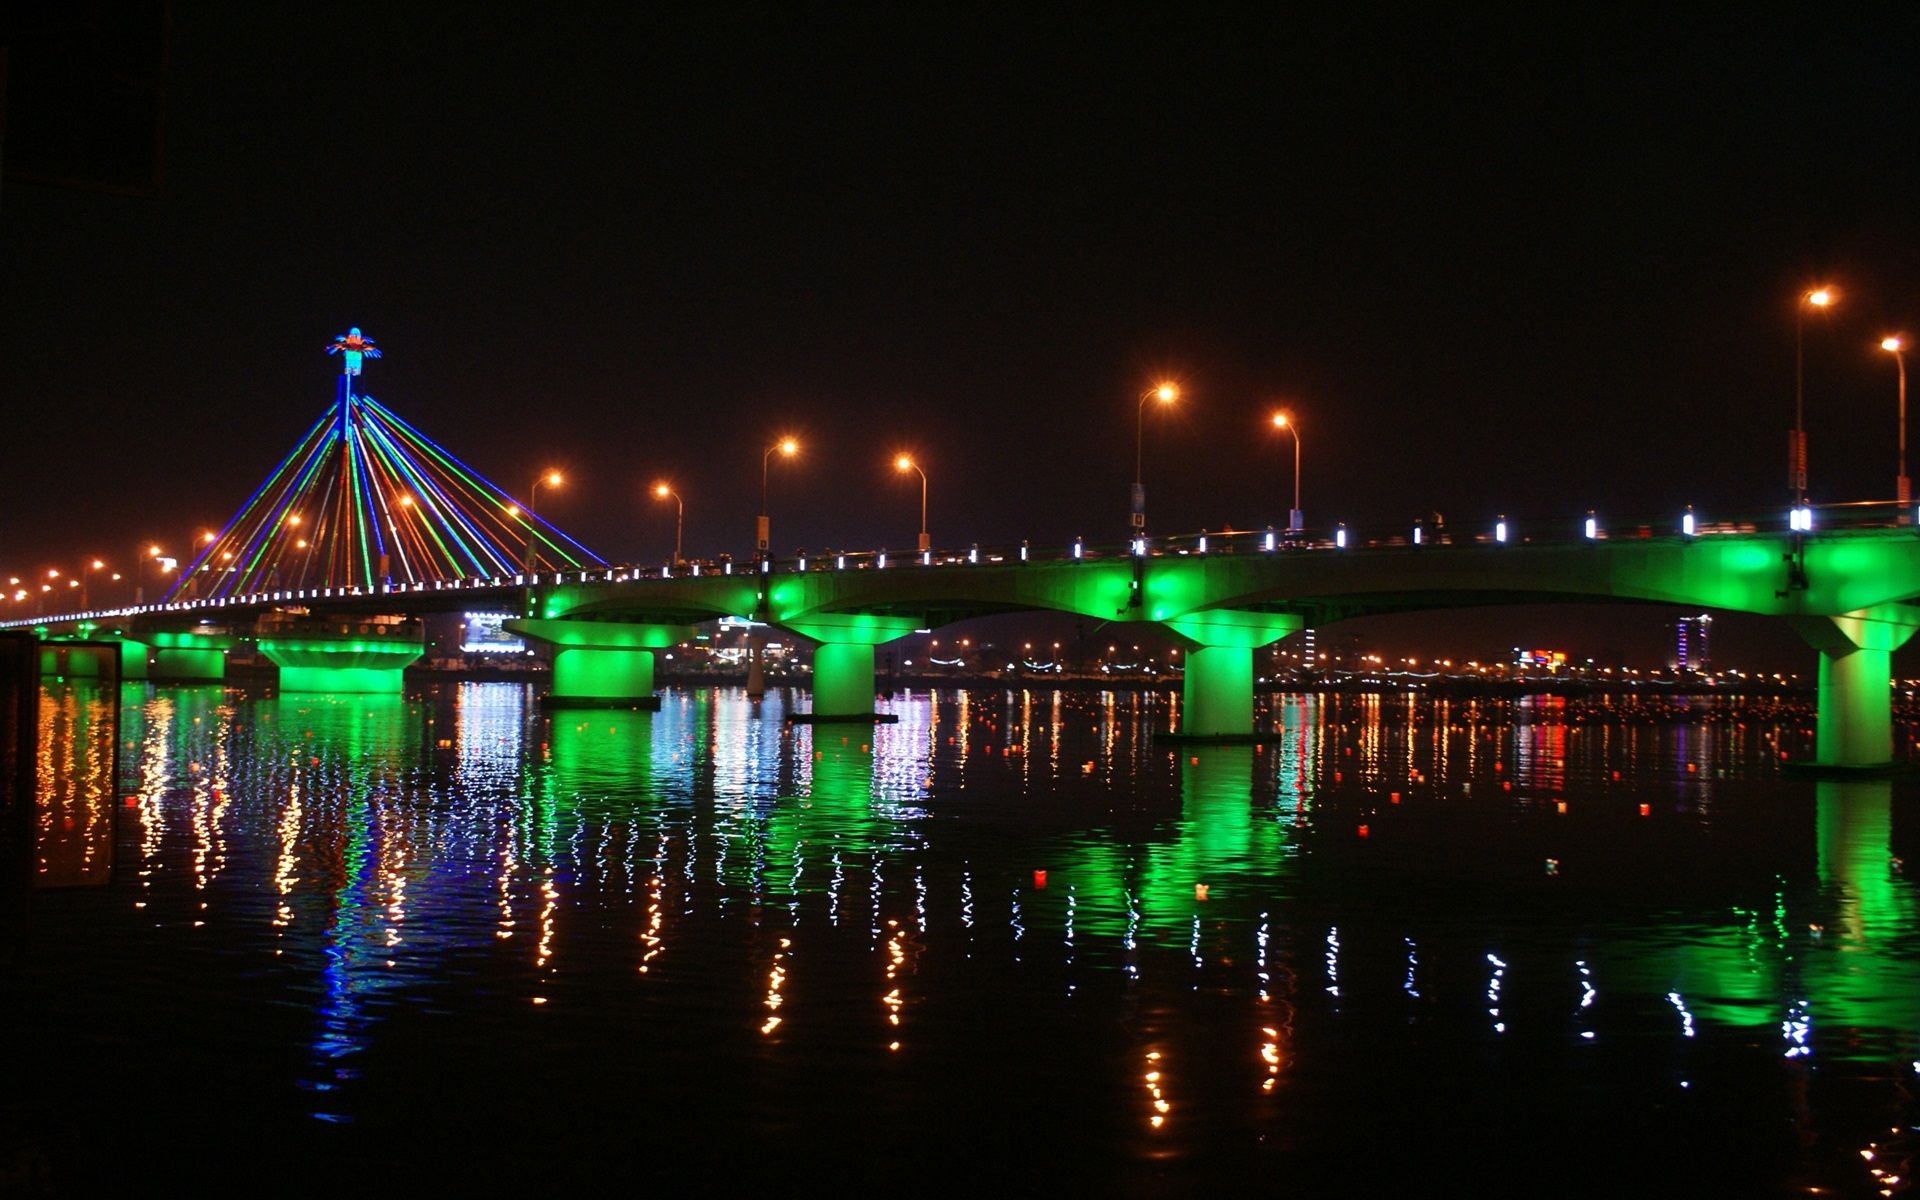 Han River, Korea, Bridge, Beautiful Illumination, Night, Water Reflection 640x1136 IPhone 5 5S 5C SE Wallpaper, Background, Picture, Image